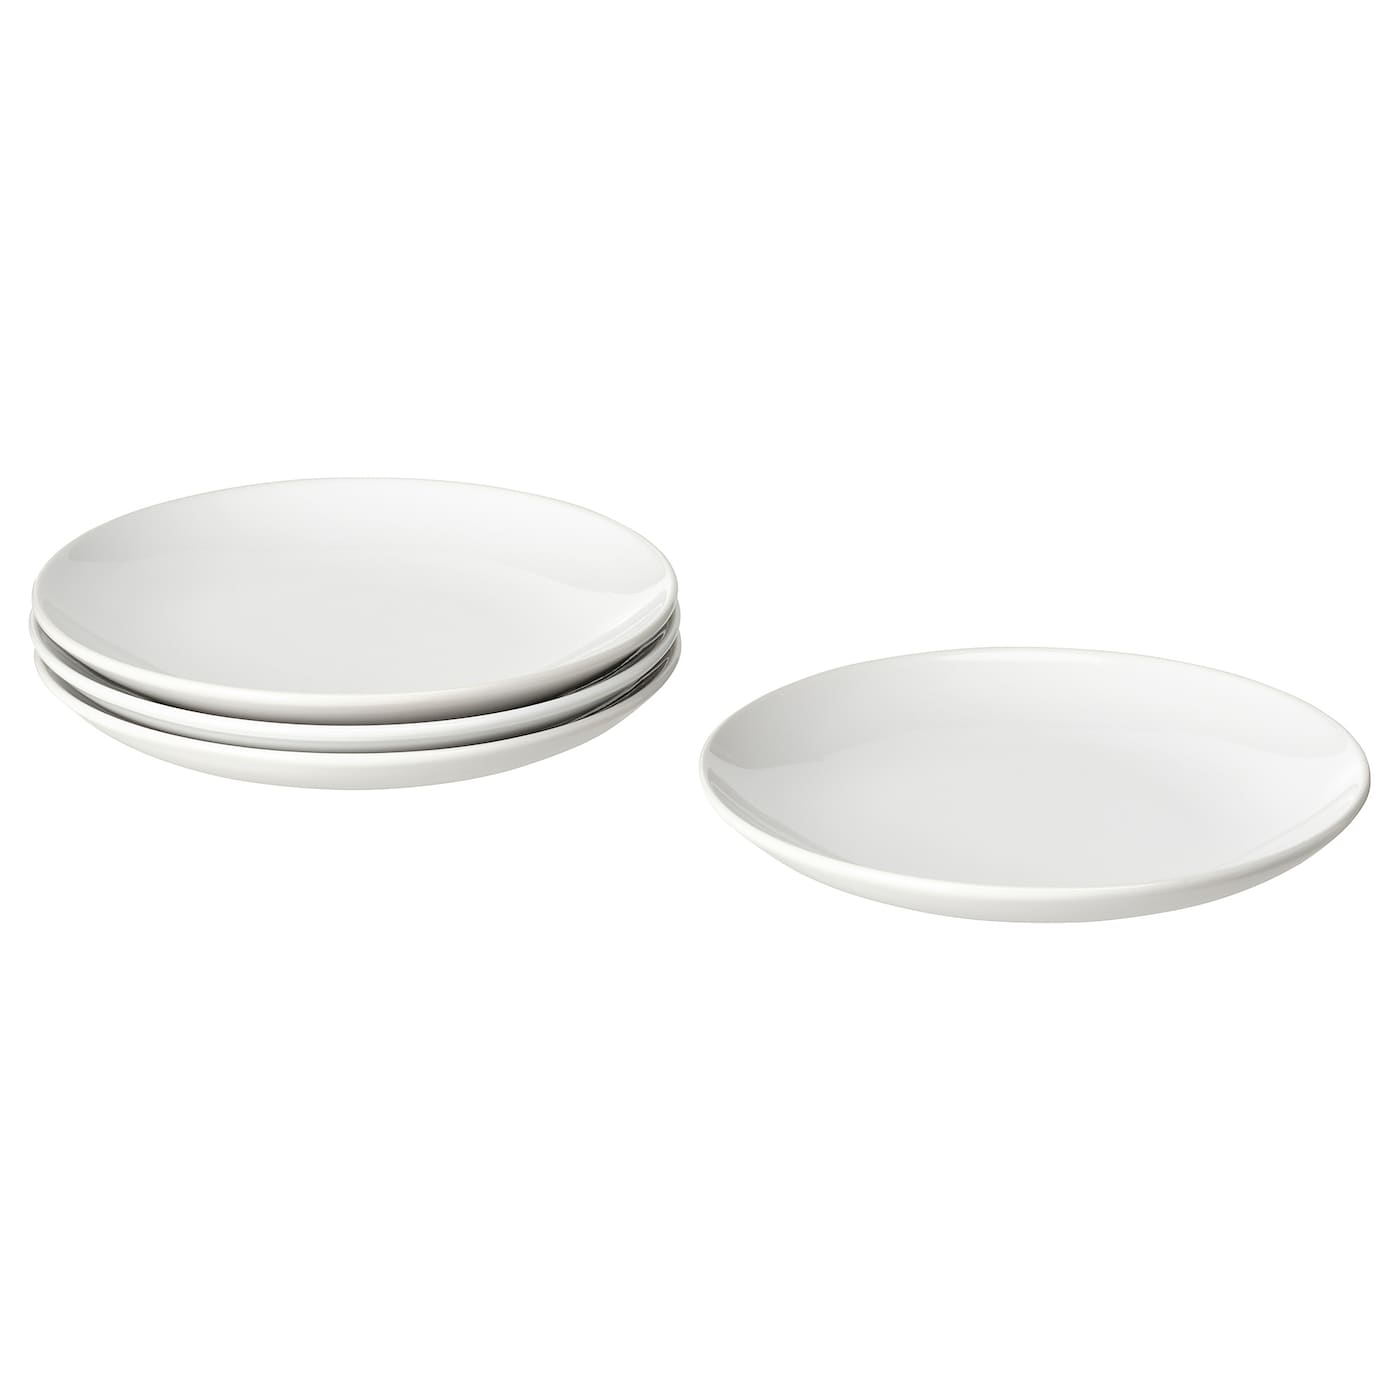 Набор тарелок, 4 шт. - IKEA GODMIDDAG, 20 см, белый, ГОДМИДДАГ ИКЕА